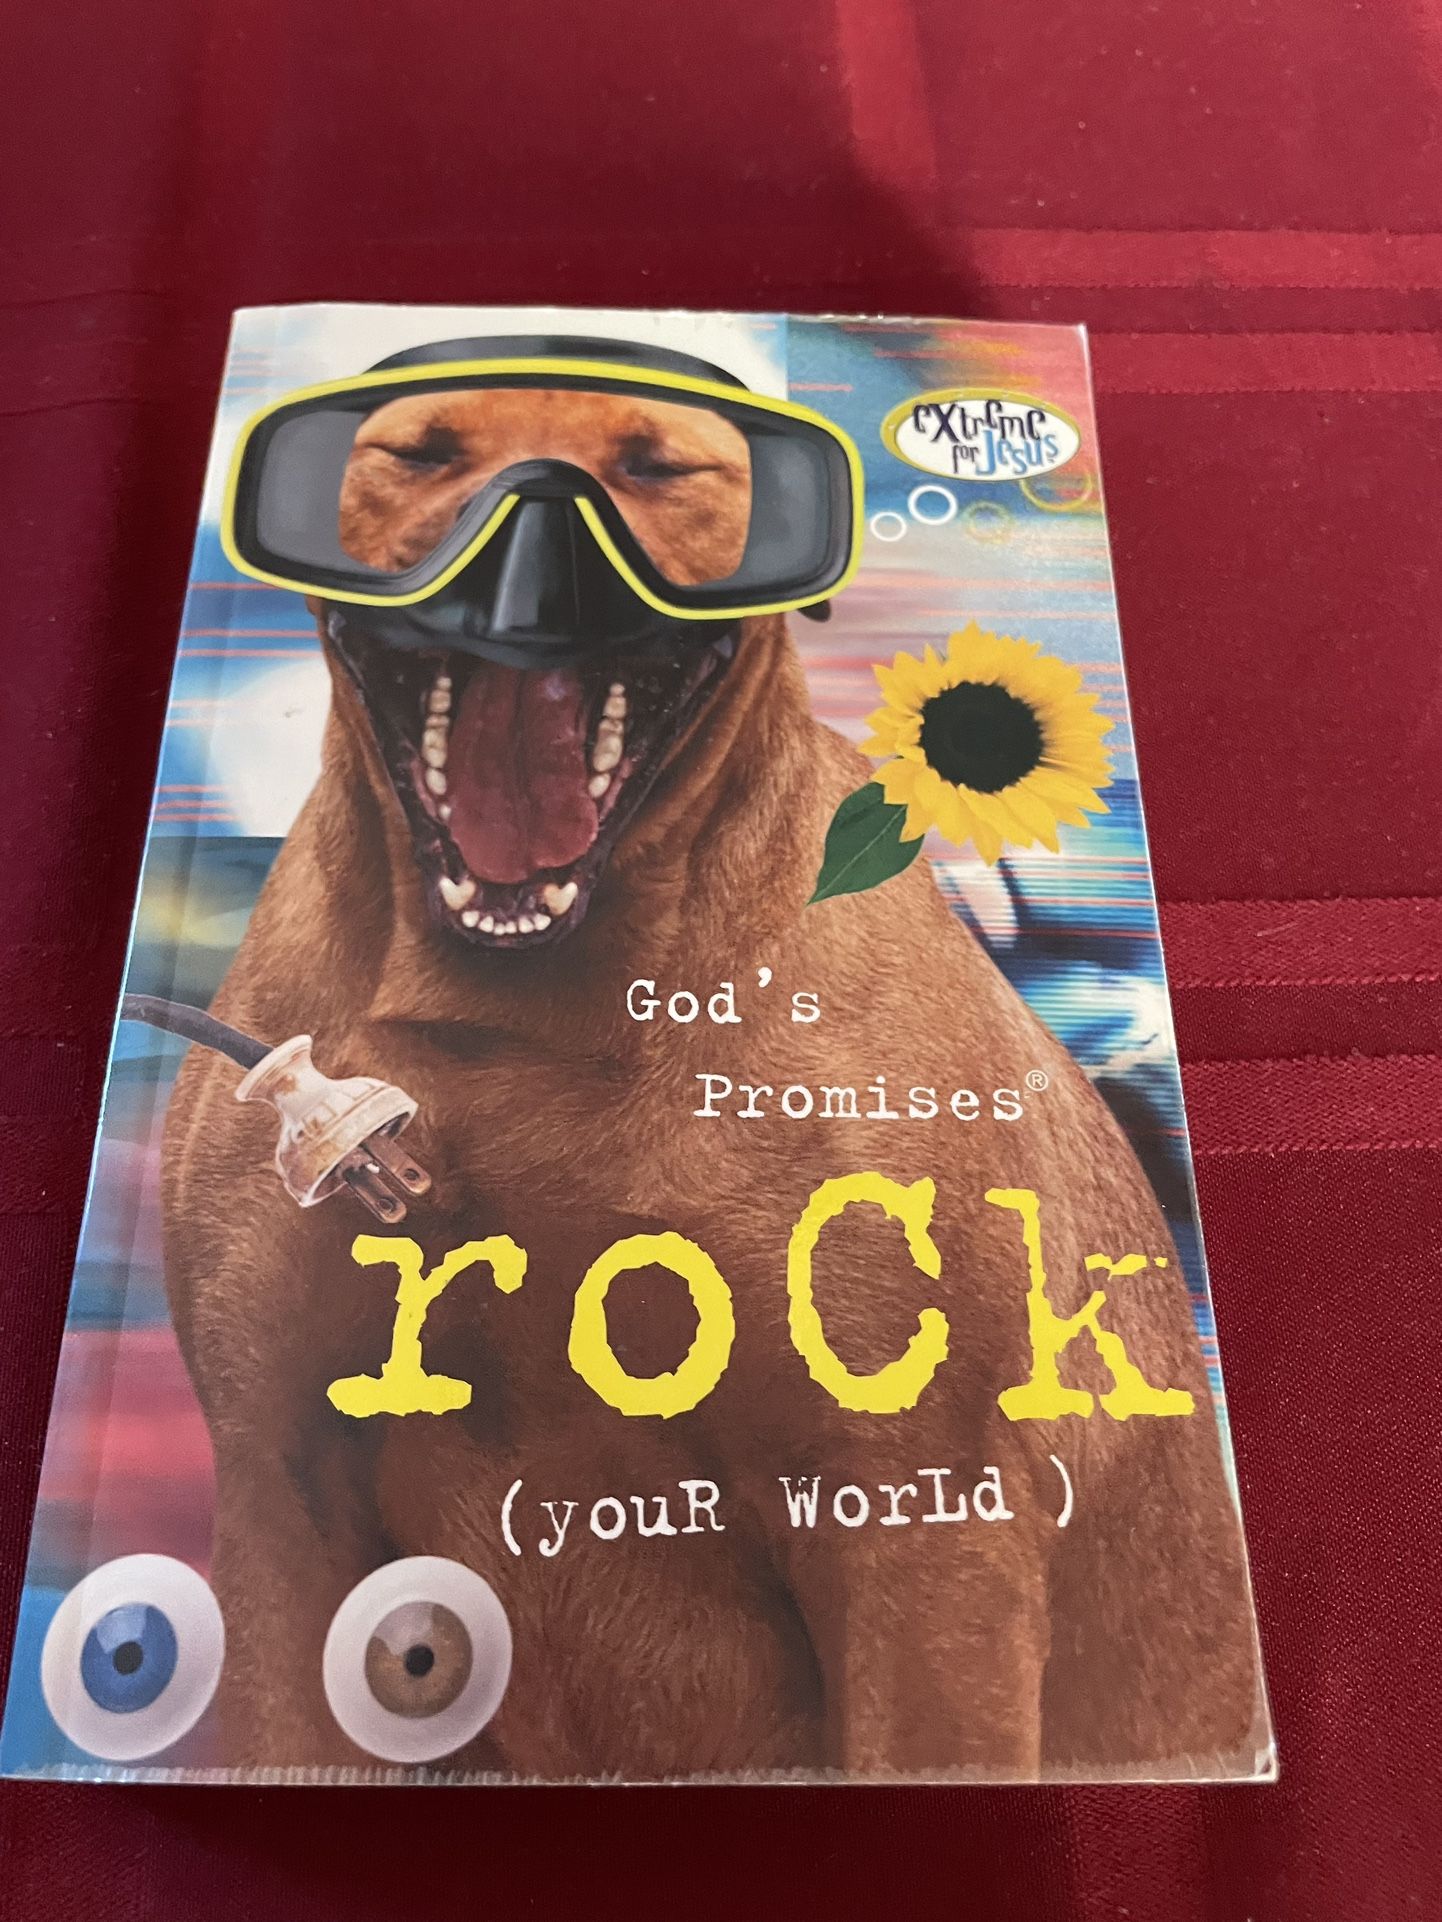 God’s Promises Rock (your world)